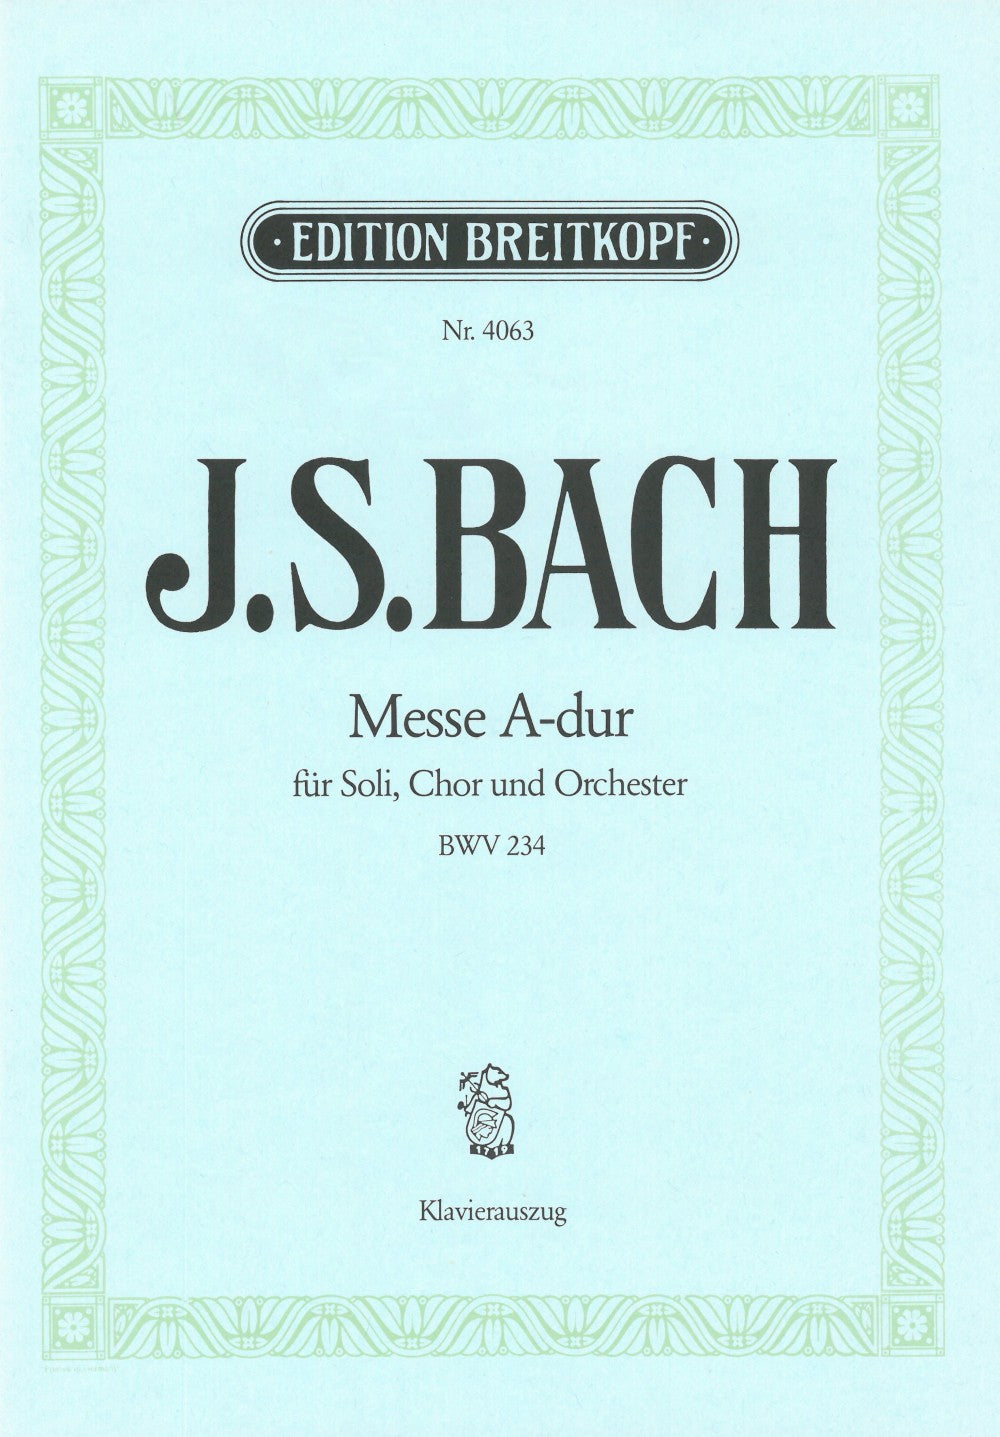 Mass B minor BWV 232 by Johann Sebastian Bach « Facsimile edition